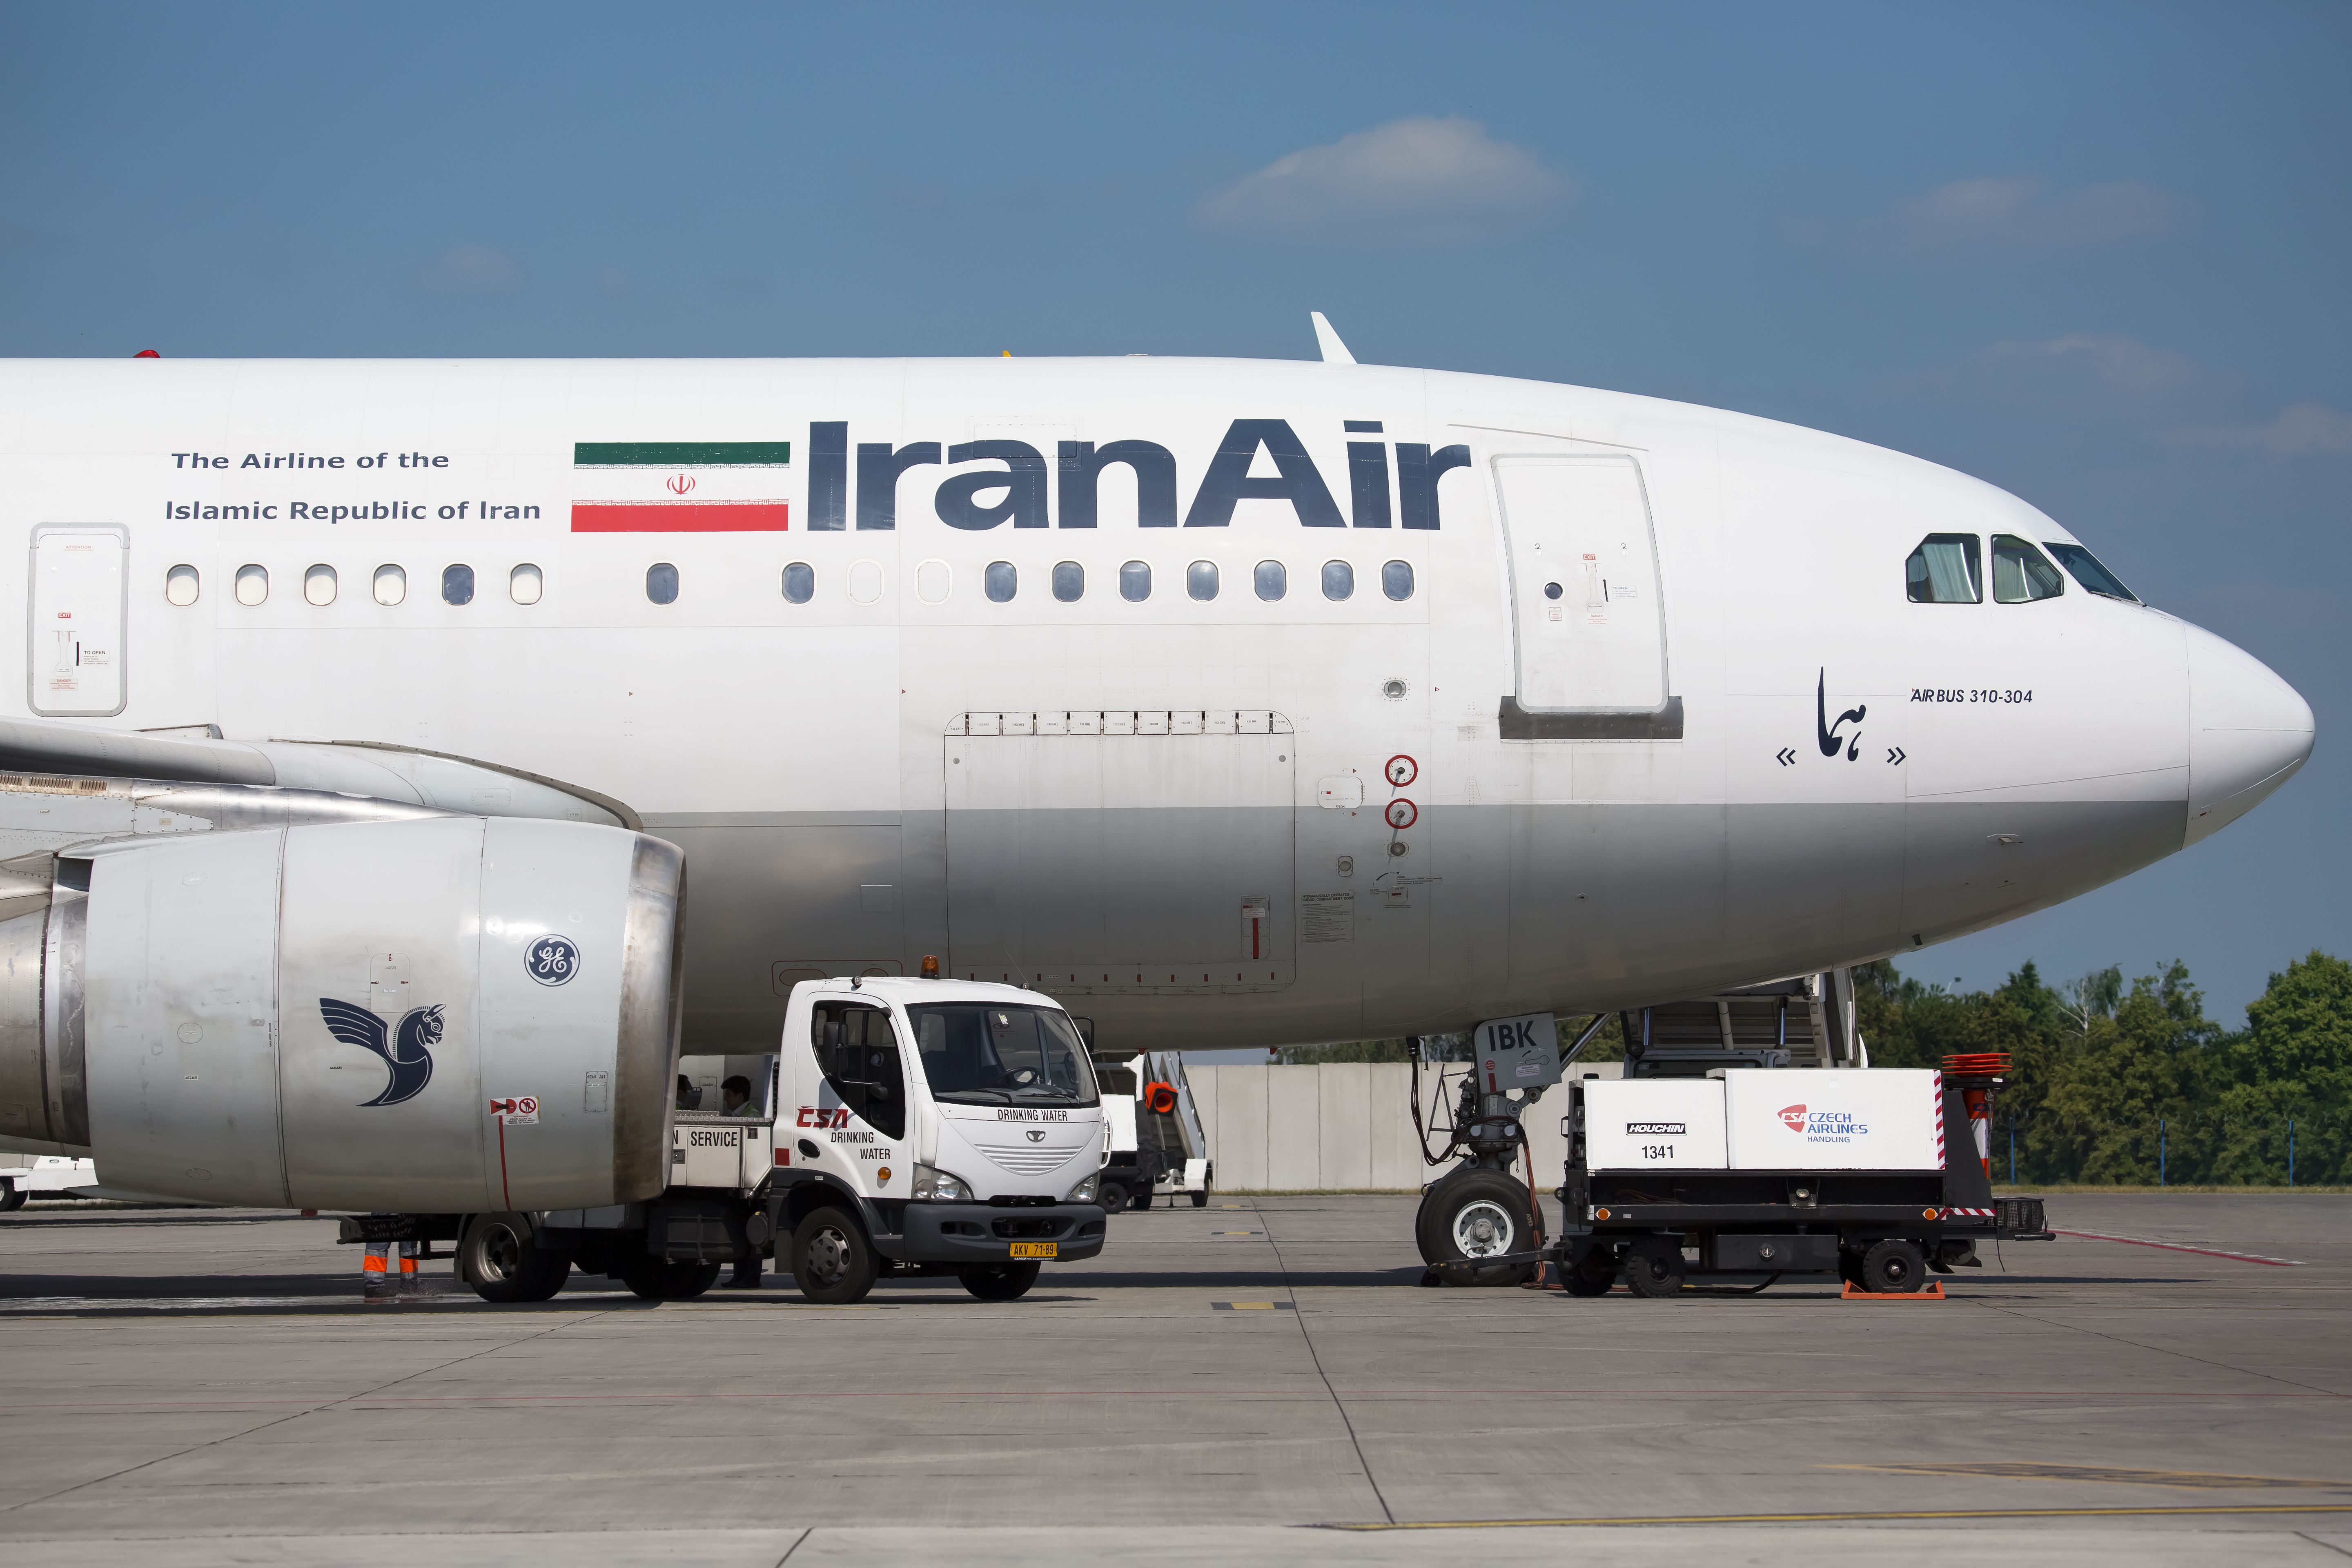 IranAir Airbus A310 at Prague Airport PRG shutterstock_399977800